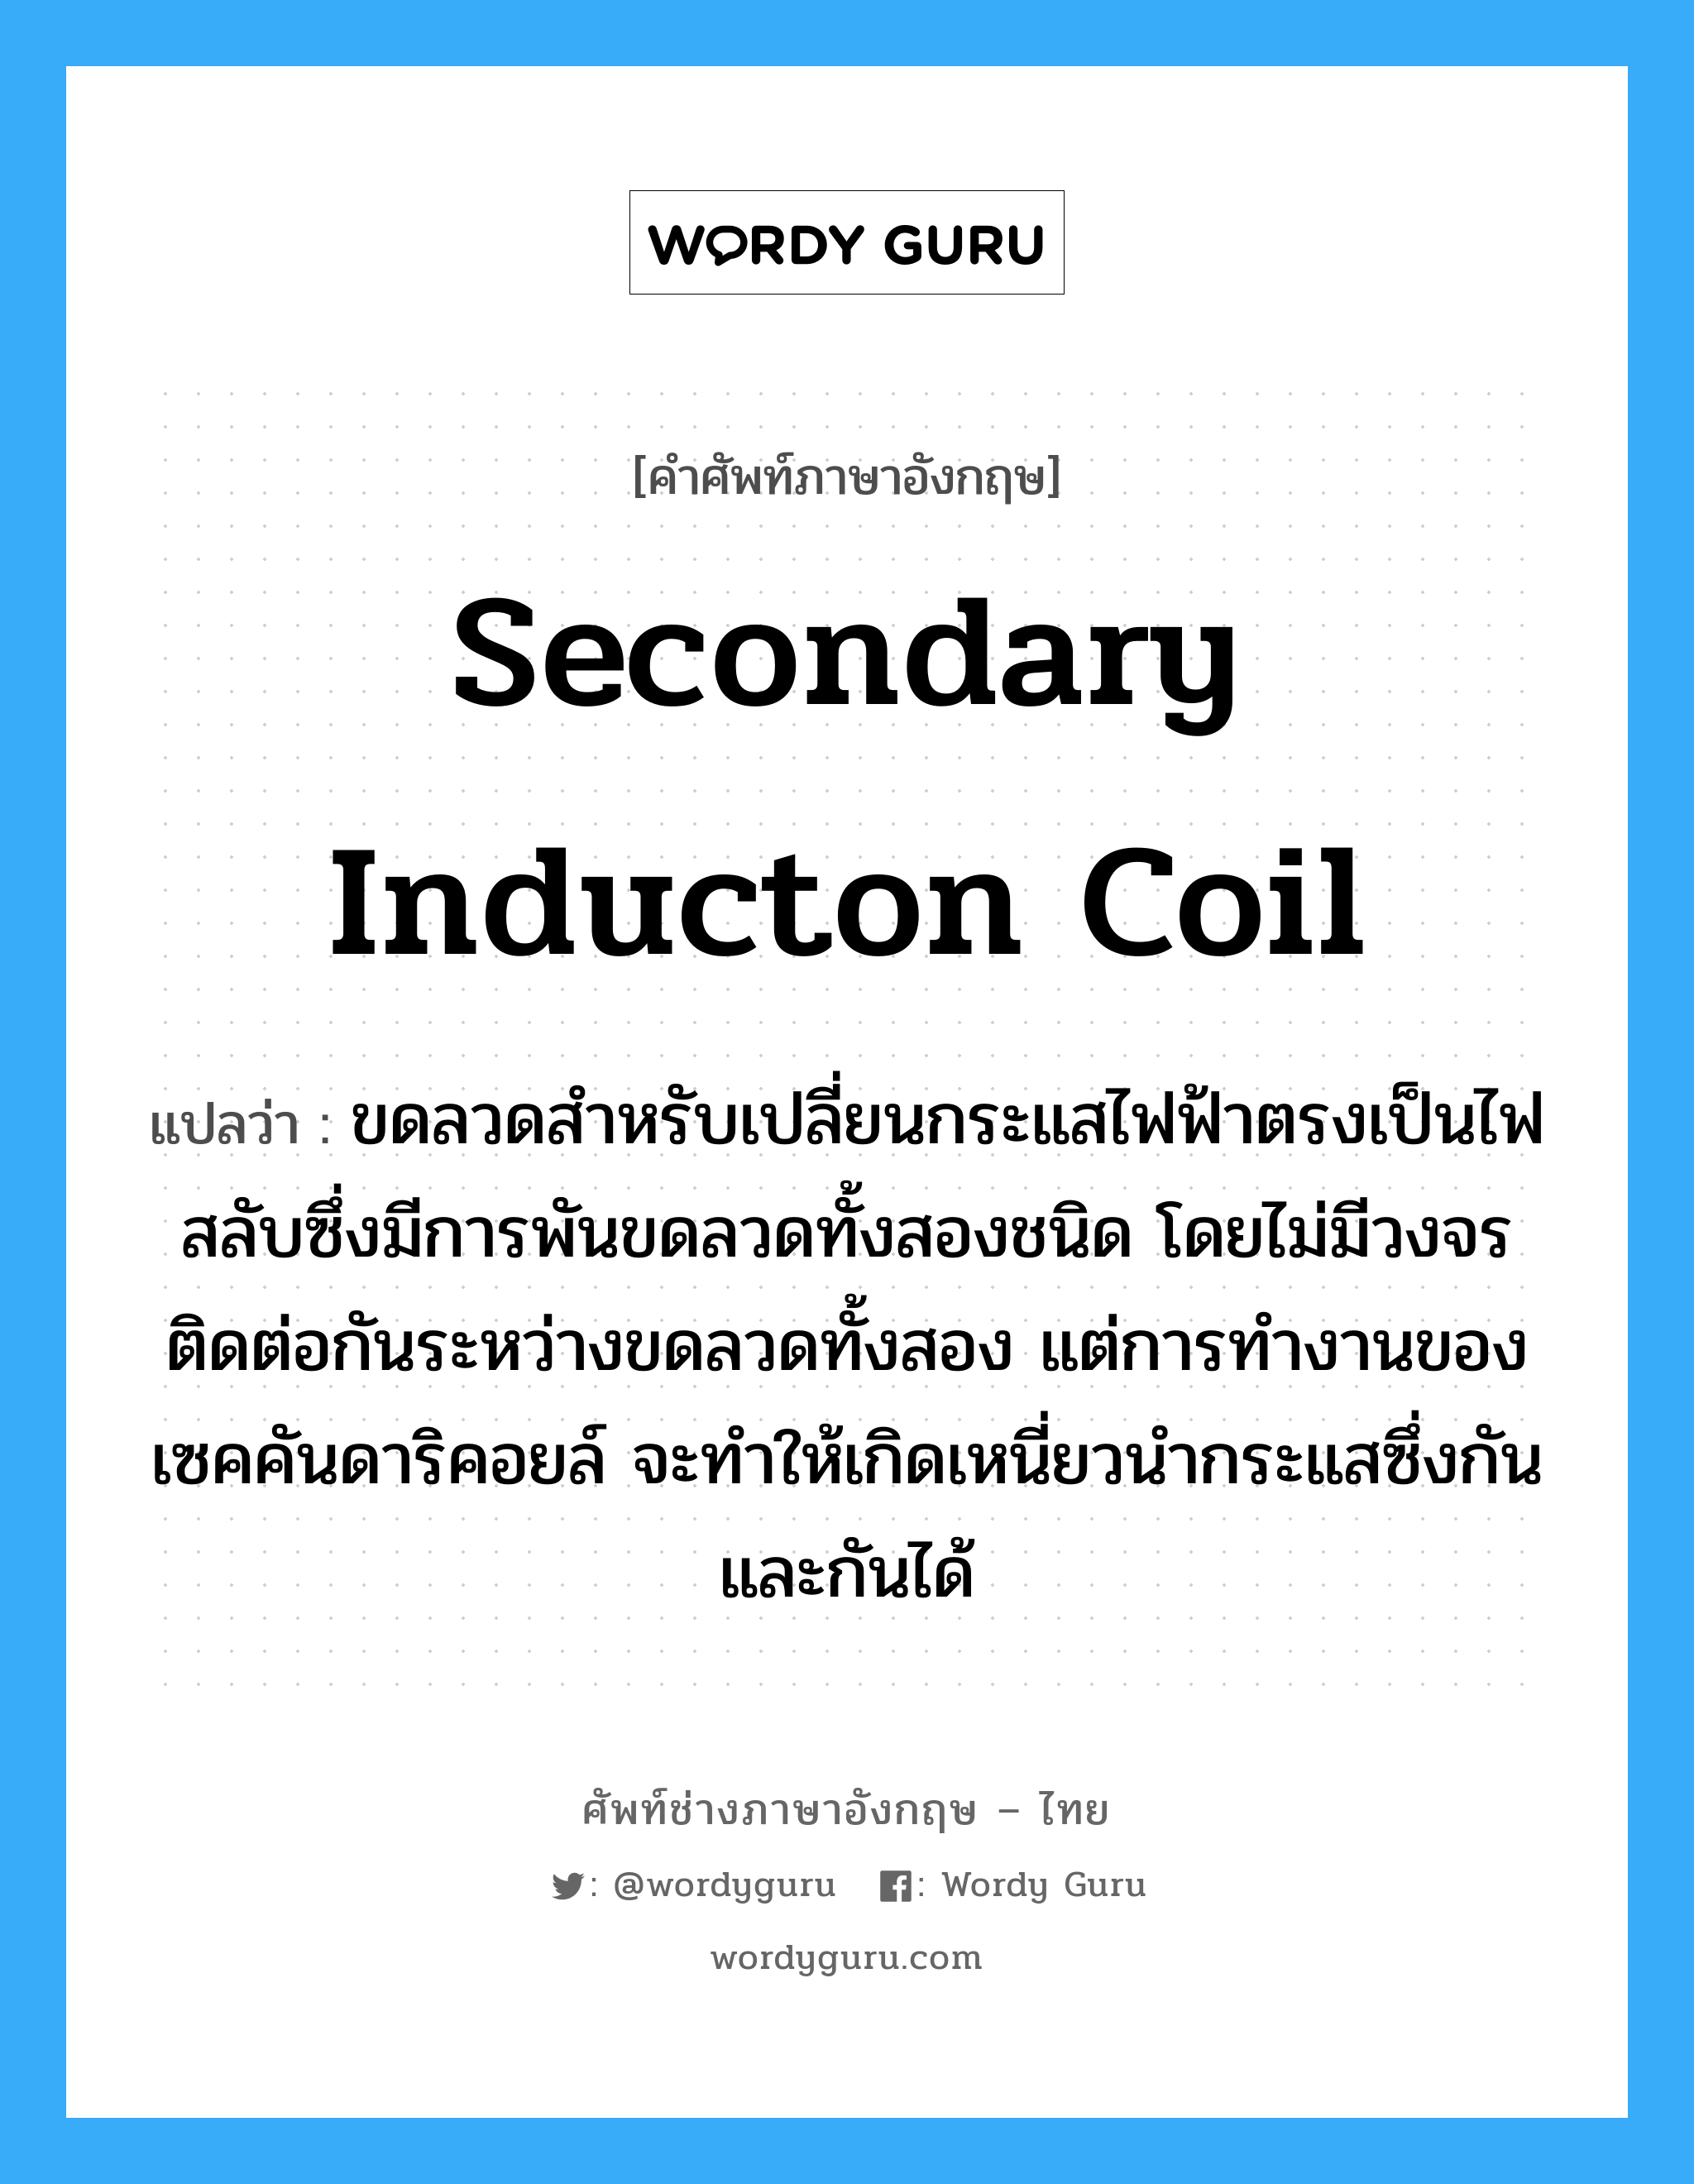 secondary inducton coil แปลว่า?, คำศัพท์ช่างภาษาอังกฤษ - ไทย secondary inducton coil คำศัพท์ภาษาอังกฤษ secondary inducton coil แปลว่า ขดลวดสำหรับเปลี่ยนกระแสไฟฟ้าตรงเป็นไฟสลับซึ่งมีการพันขดลวดทั้งสองชนิด โดยไม่มีวงจรติดต่อกันระหว่างขดลวดทั้งสอง แต่การทำงานของเซคคันดาริคอยล์ จะทำให้เกิดเหนี่ยวนำกระแสซึ่งกันและกันได้